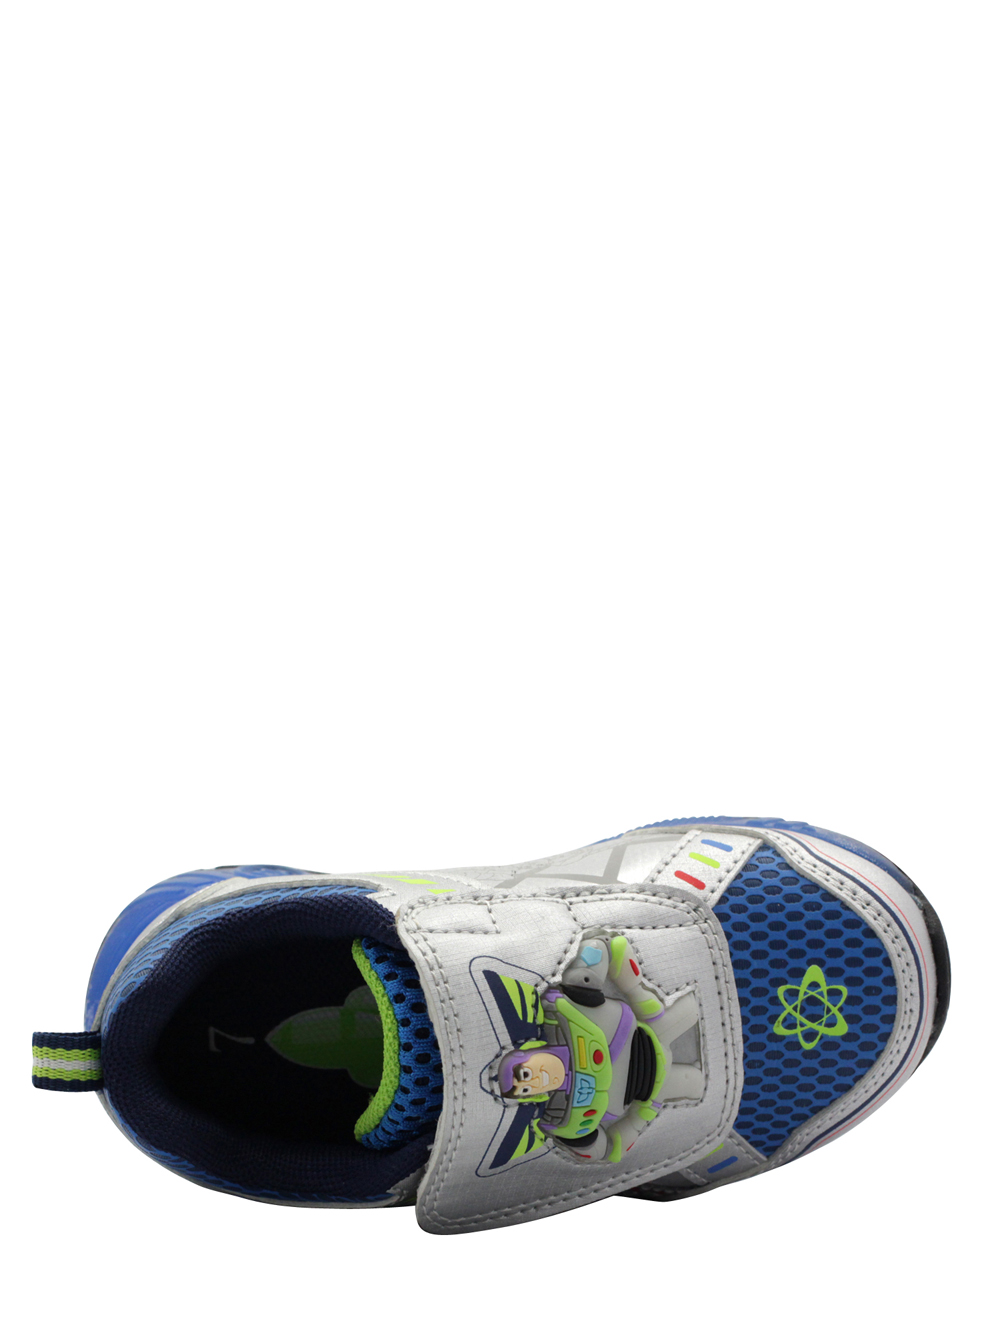 Toddler Boys' Toy Story-Disney Athletic Shoes - image 4 of 5